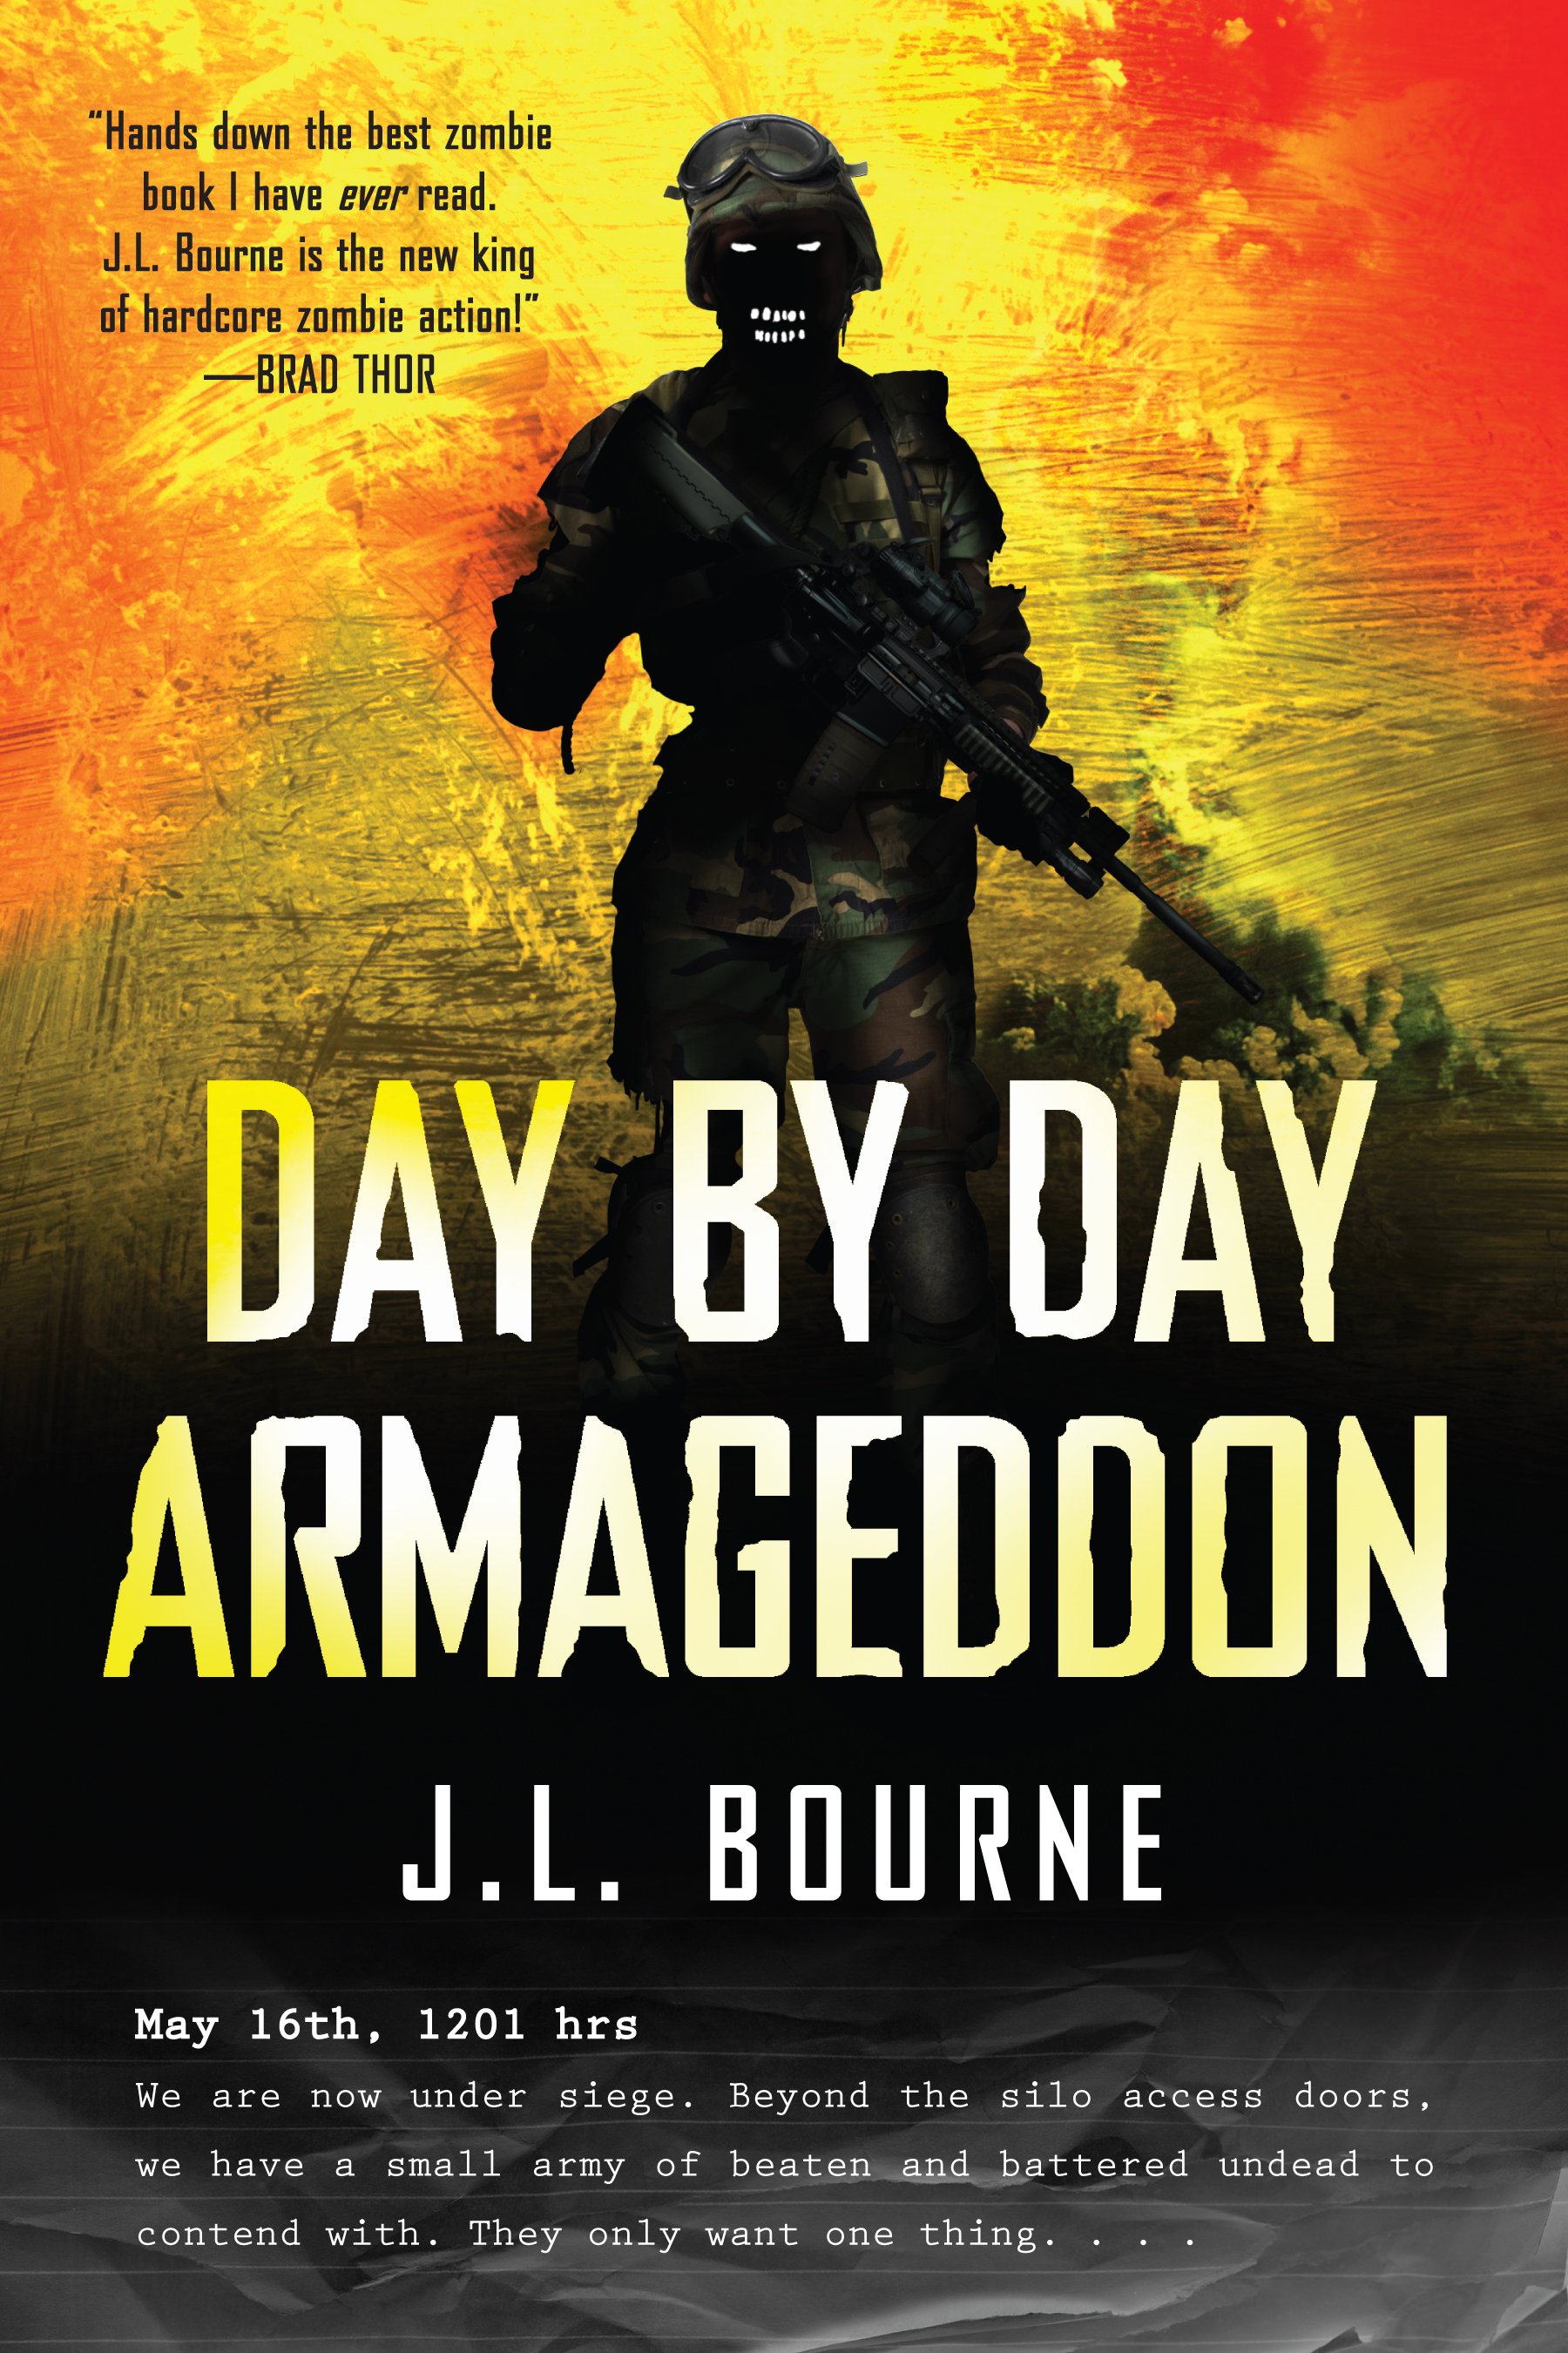 Day by Day Armageddon, by J. L. Bourne